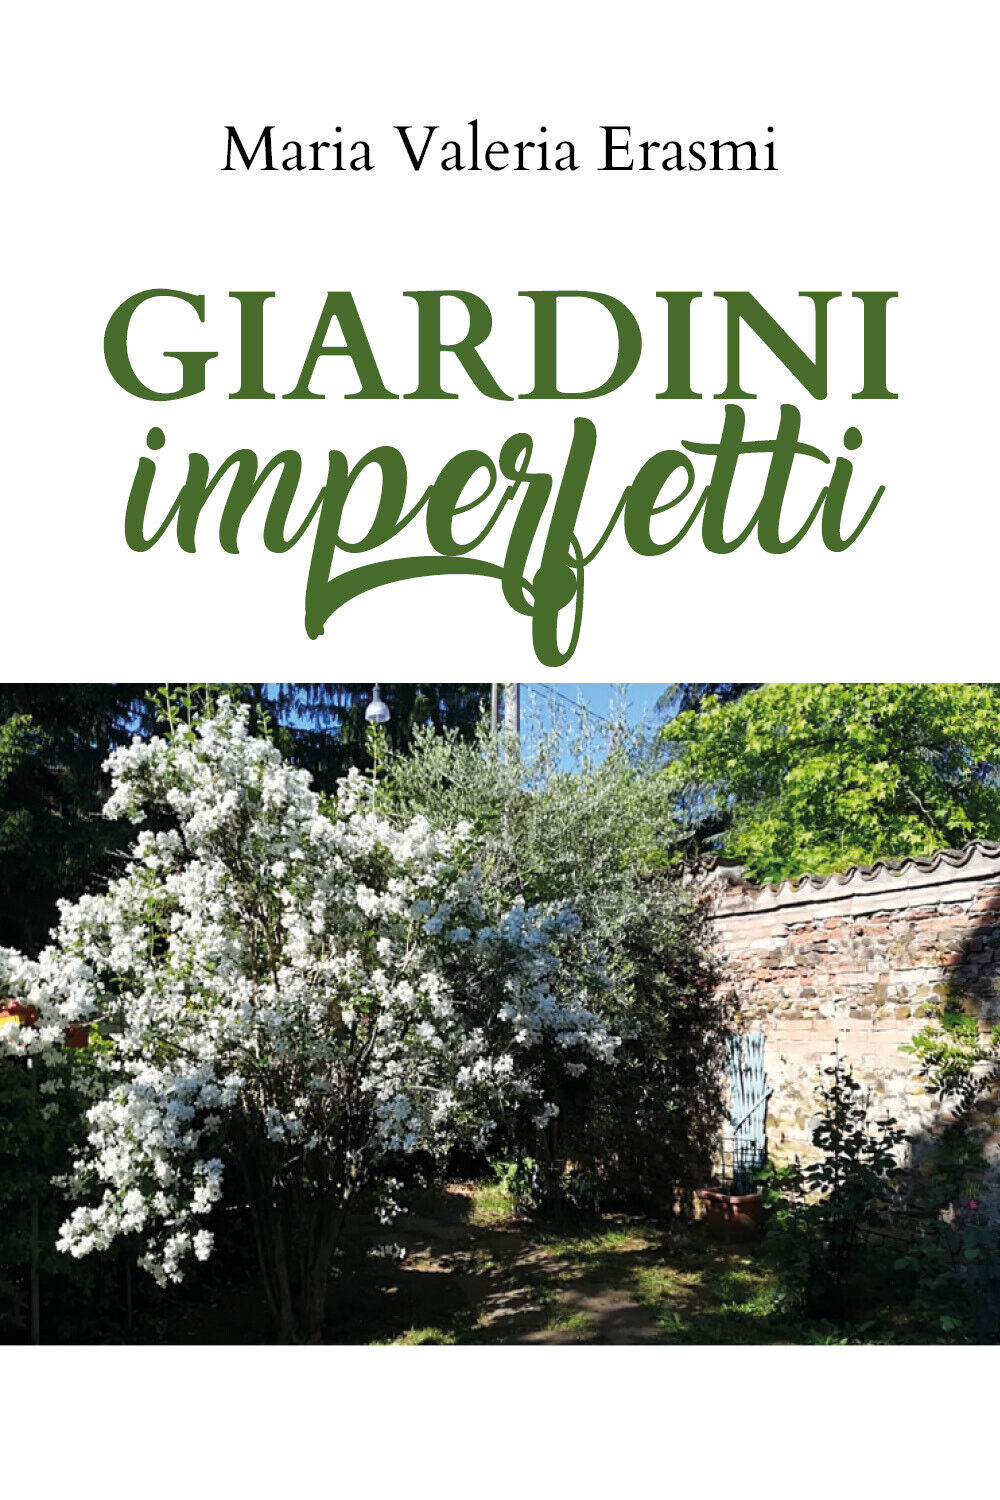 Giardini imperfetti di Maria Valeria Erasmi,  2020,  Youcanprint